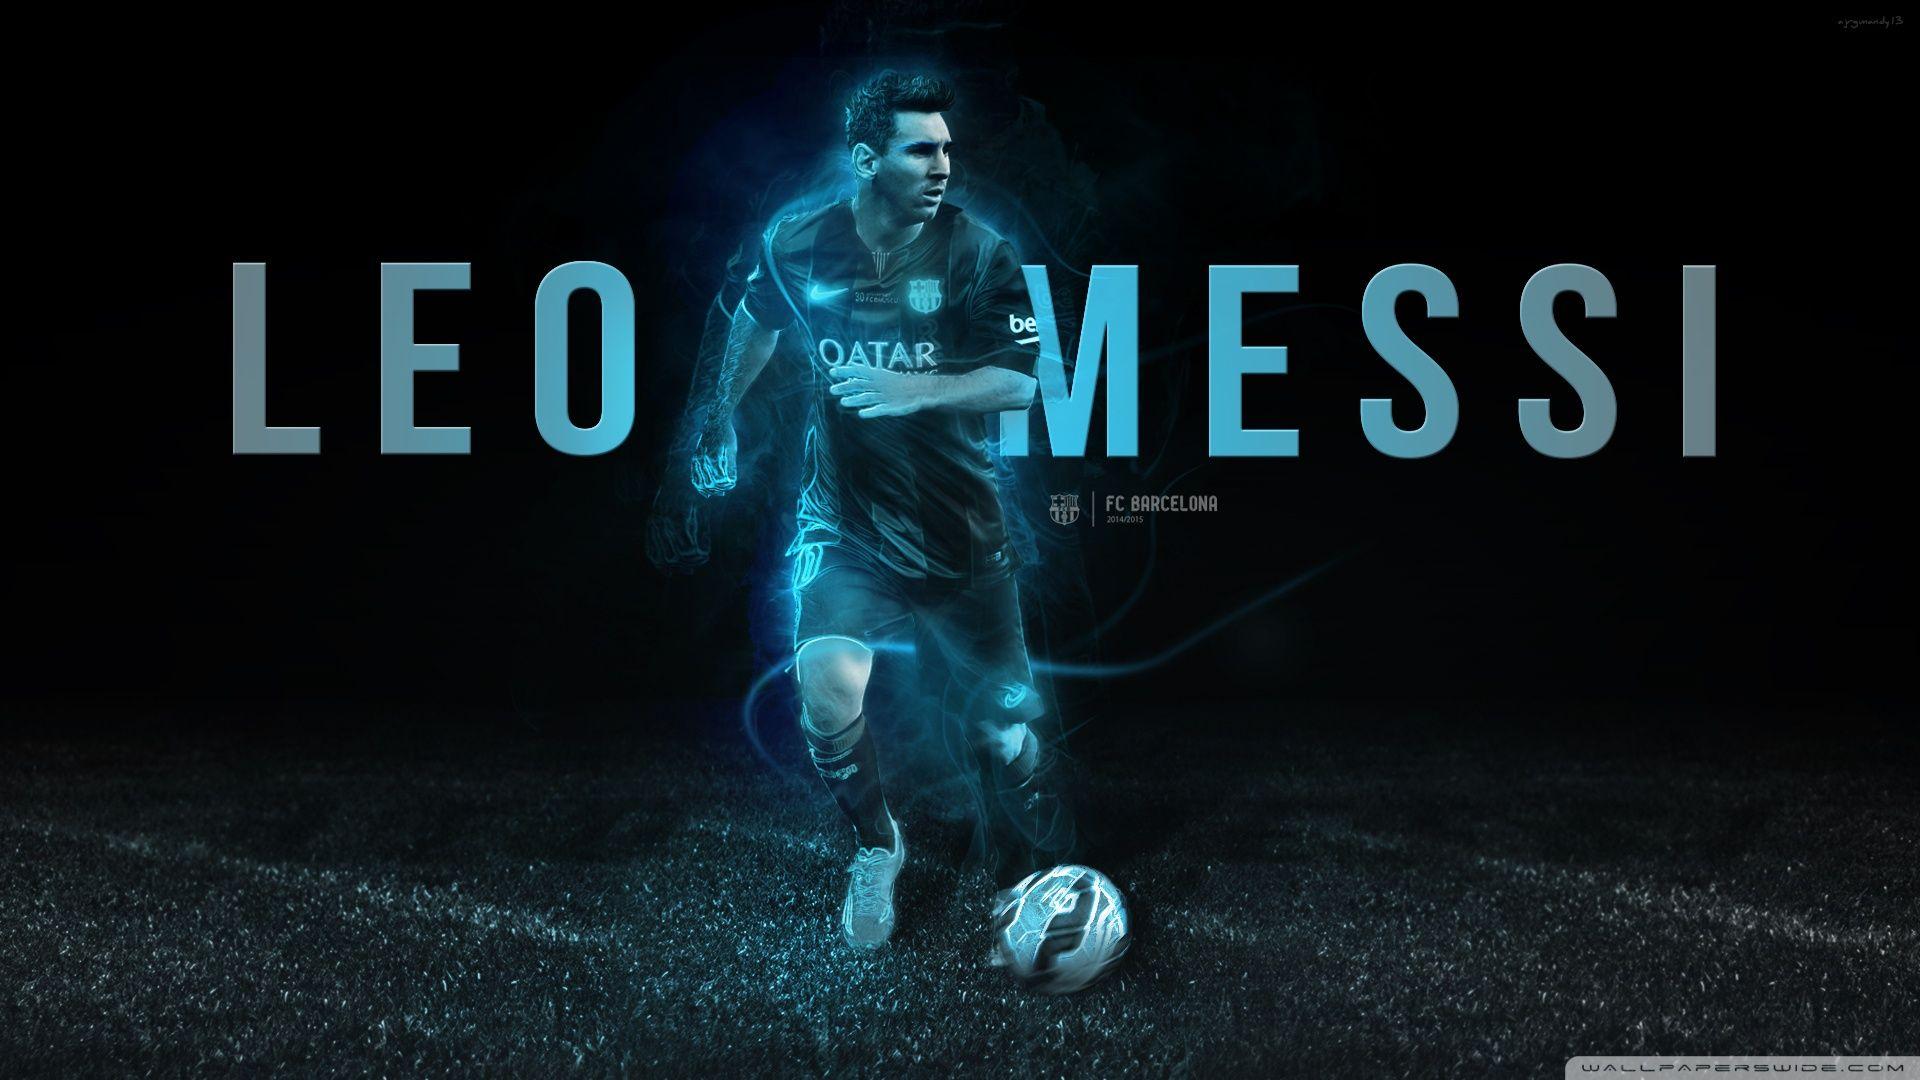 Leo Messi 2015 HD desktop wallpaper, High Definition